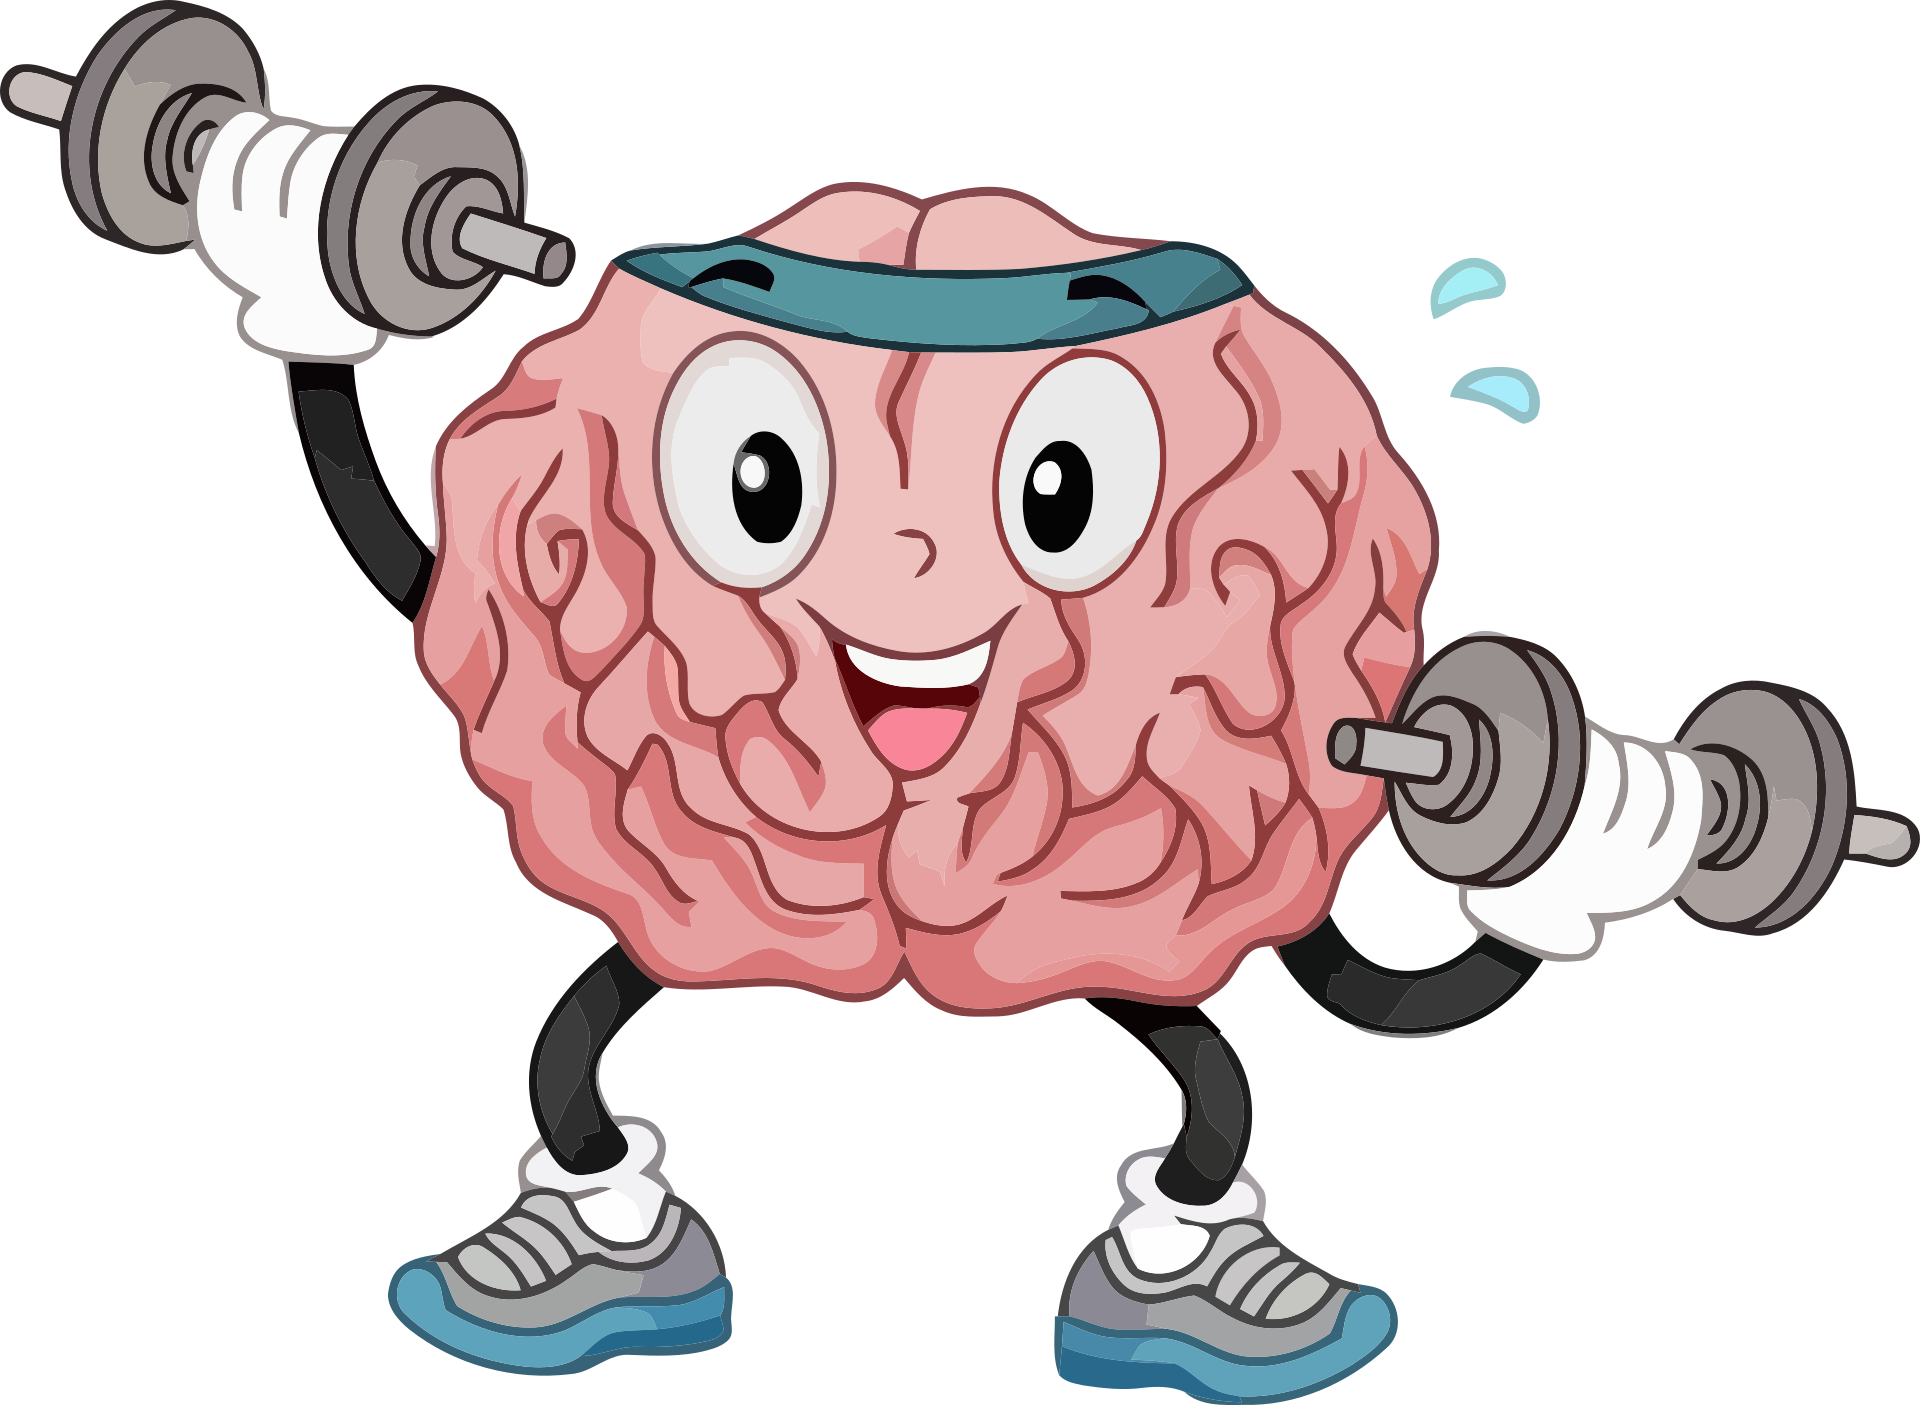 Cartoon-like happy brain doing exercise